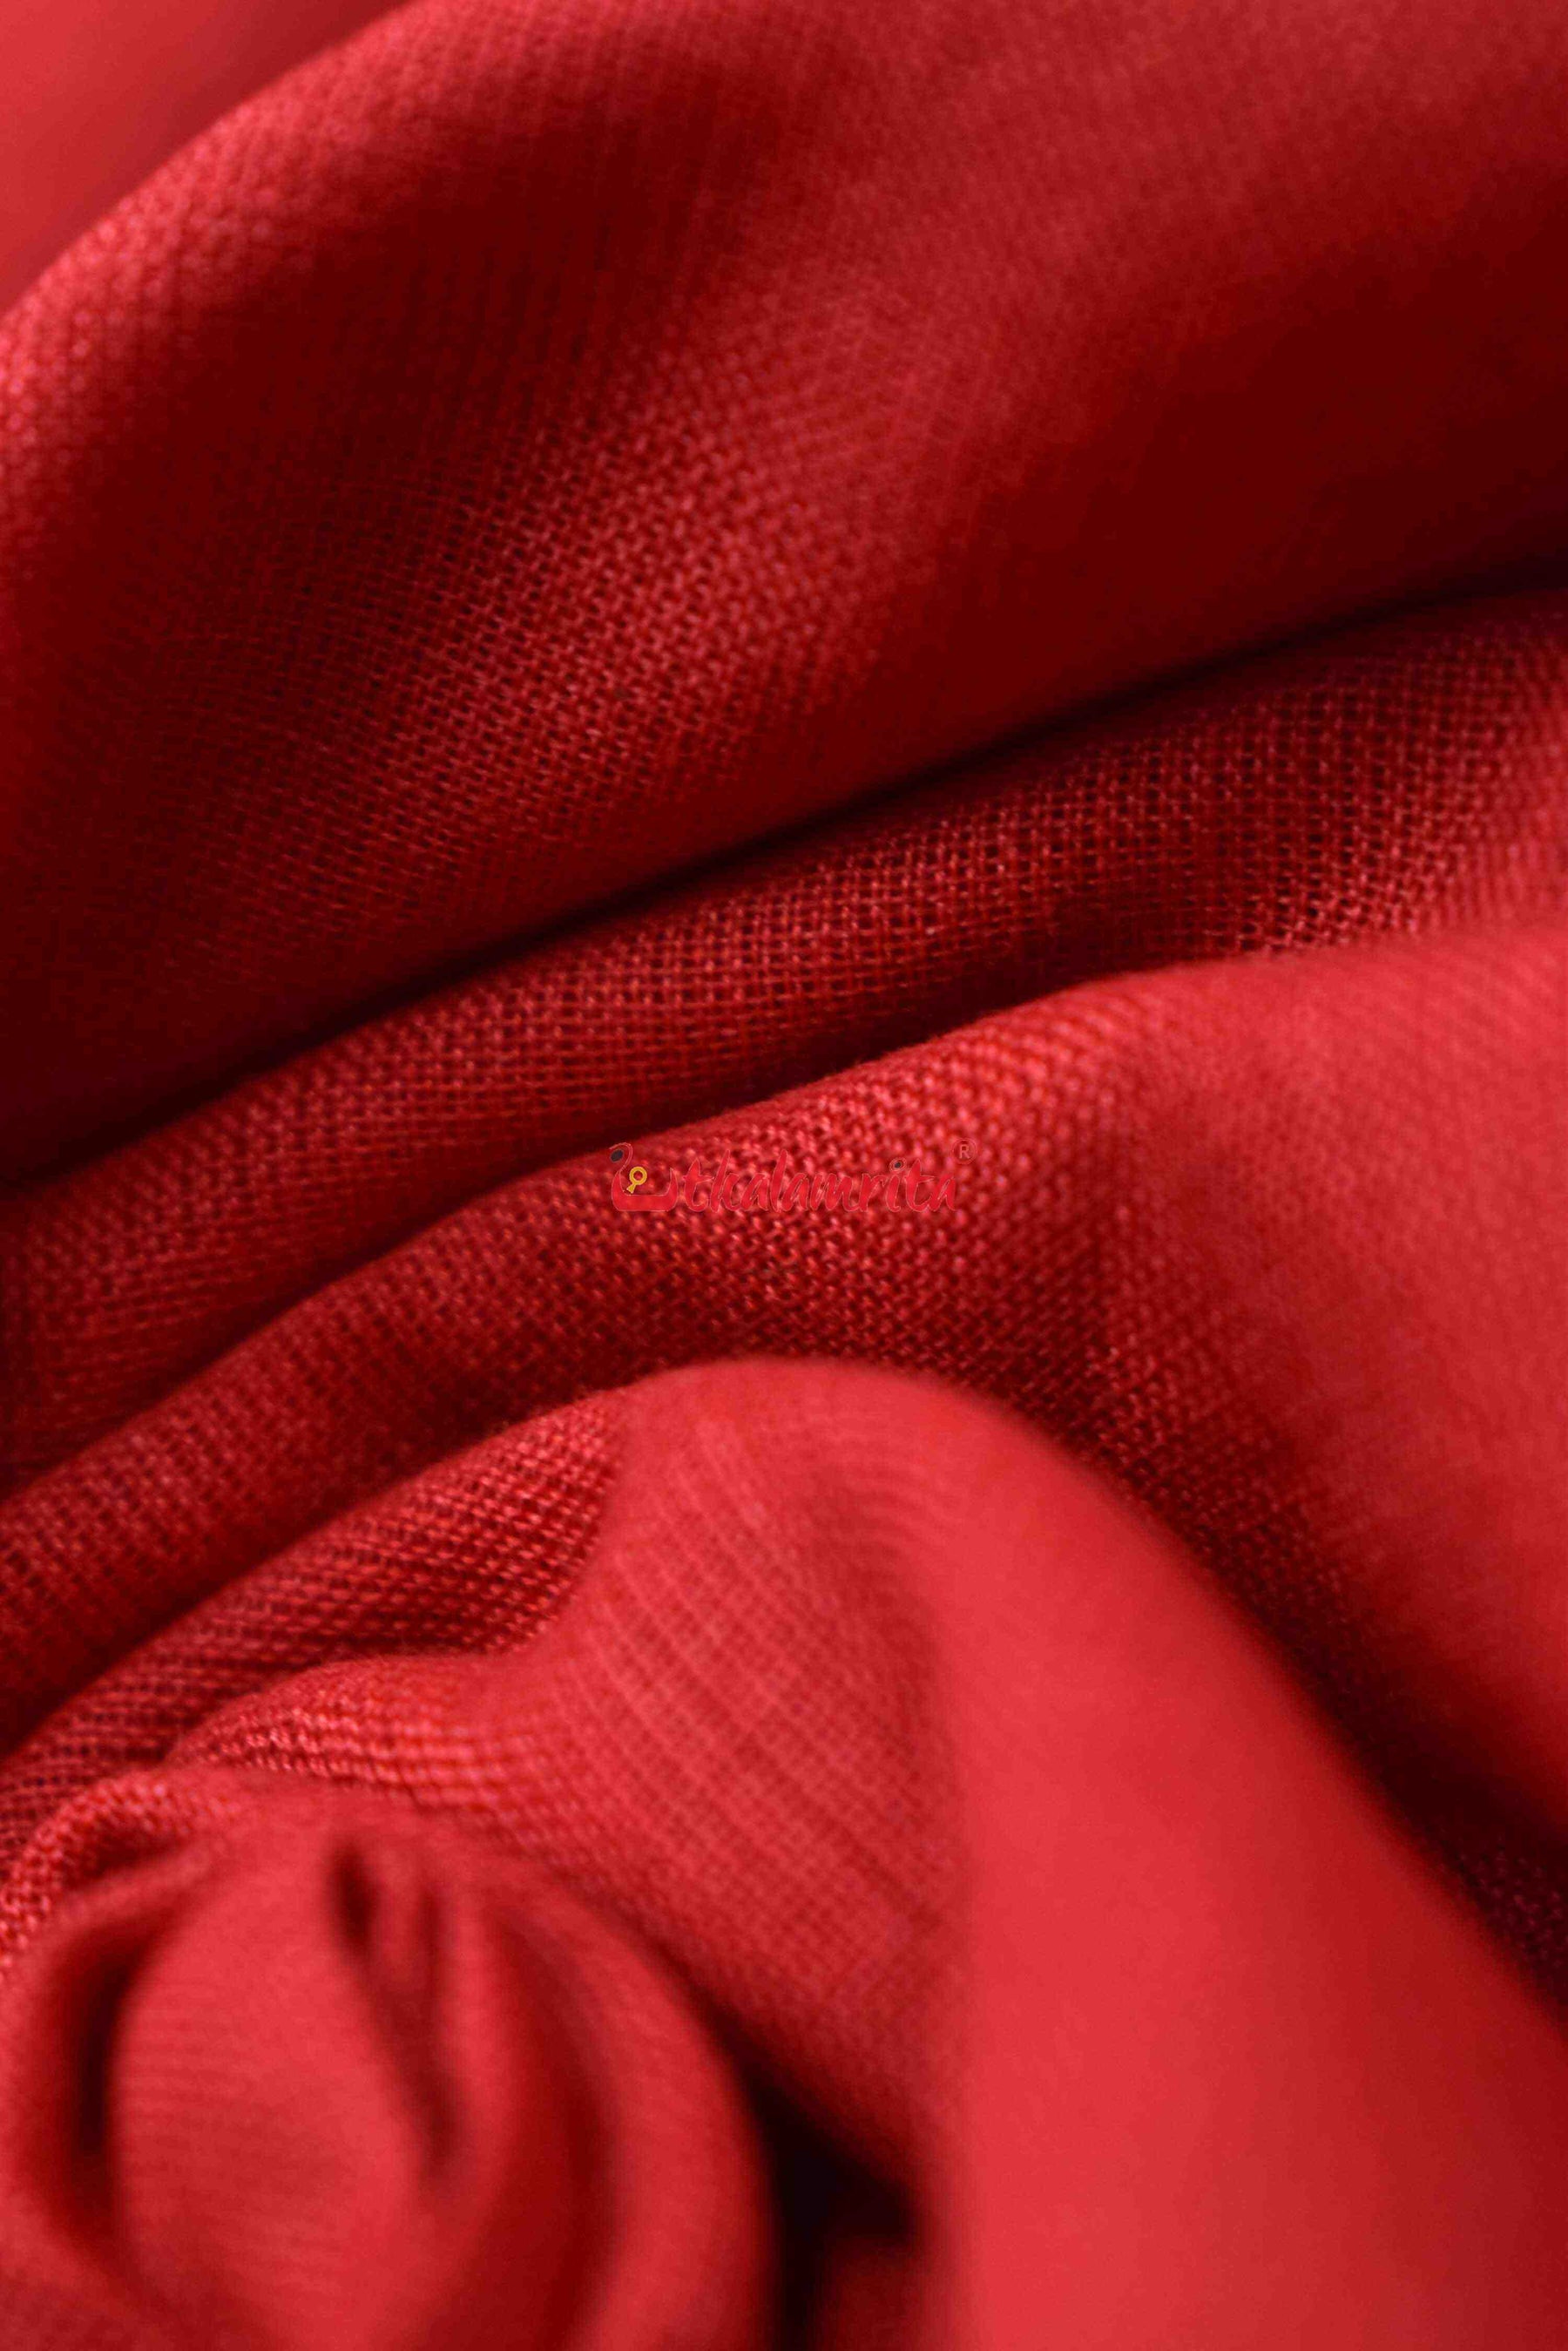 Plain Red Handloom (Fabric)